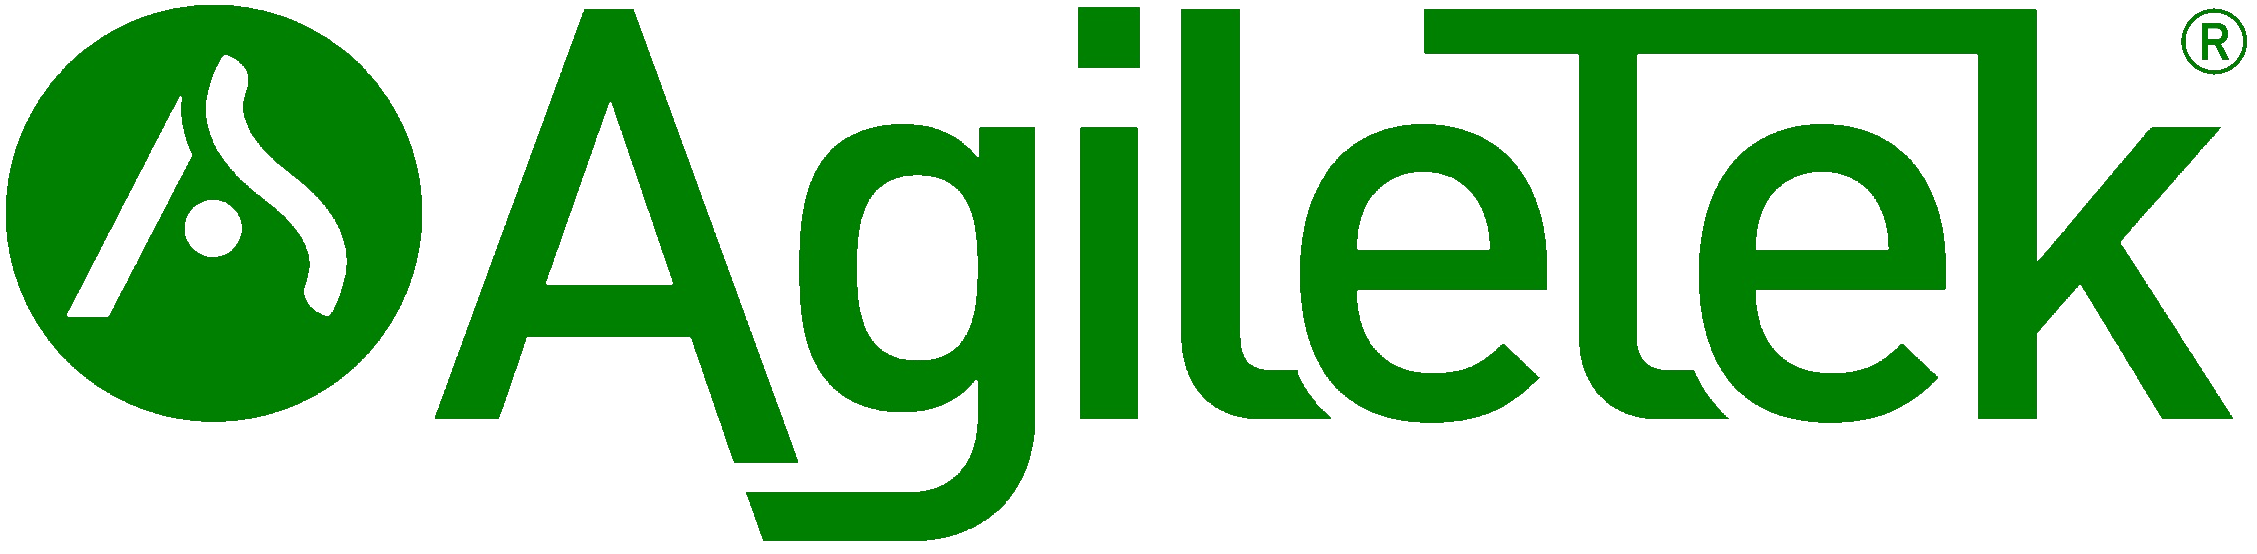 AgileTek Green large transparent